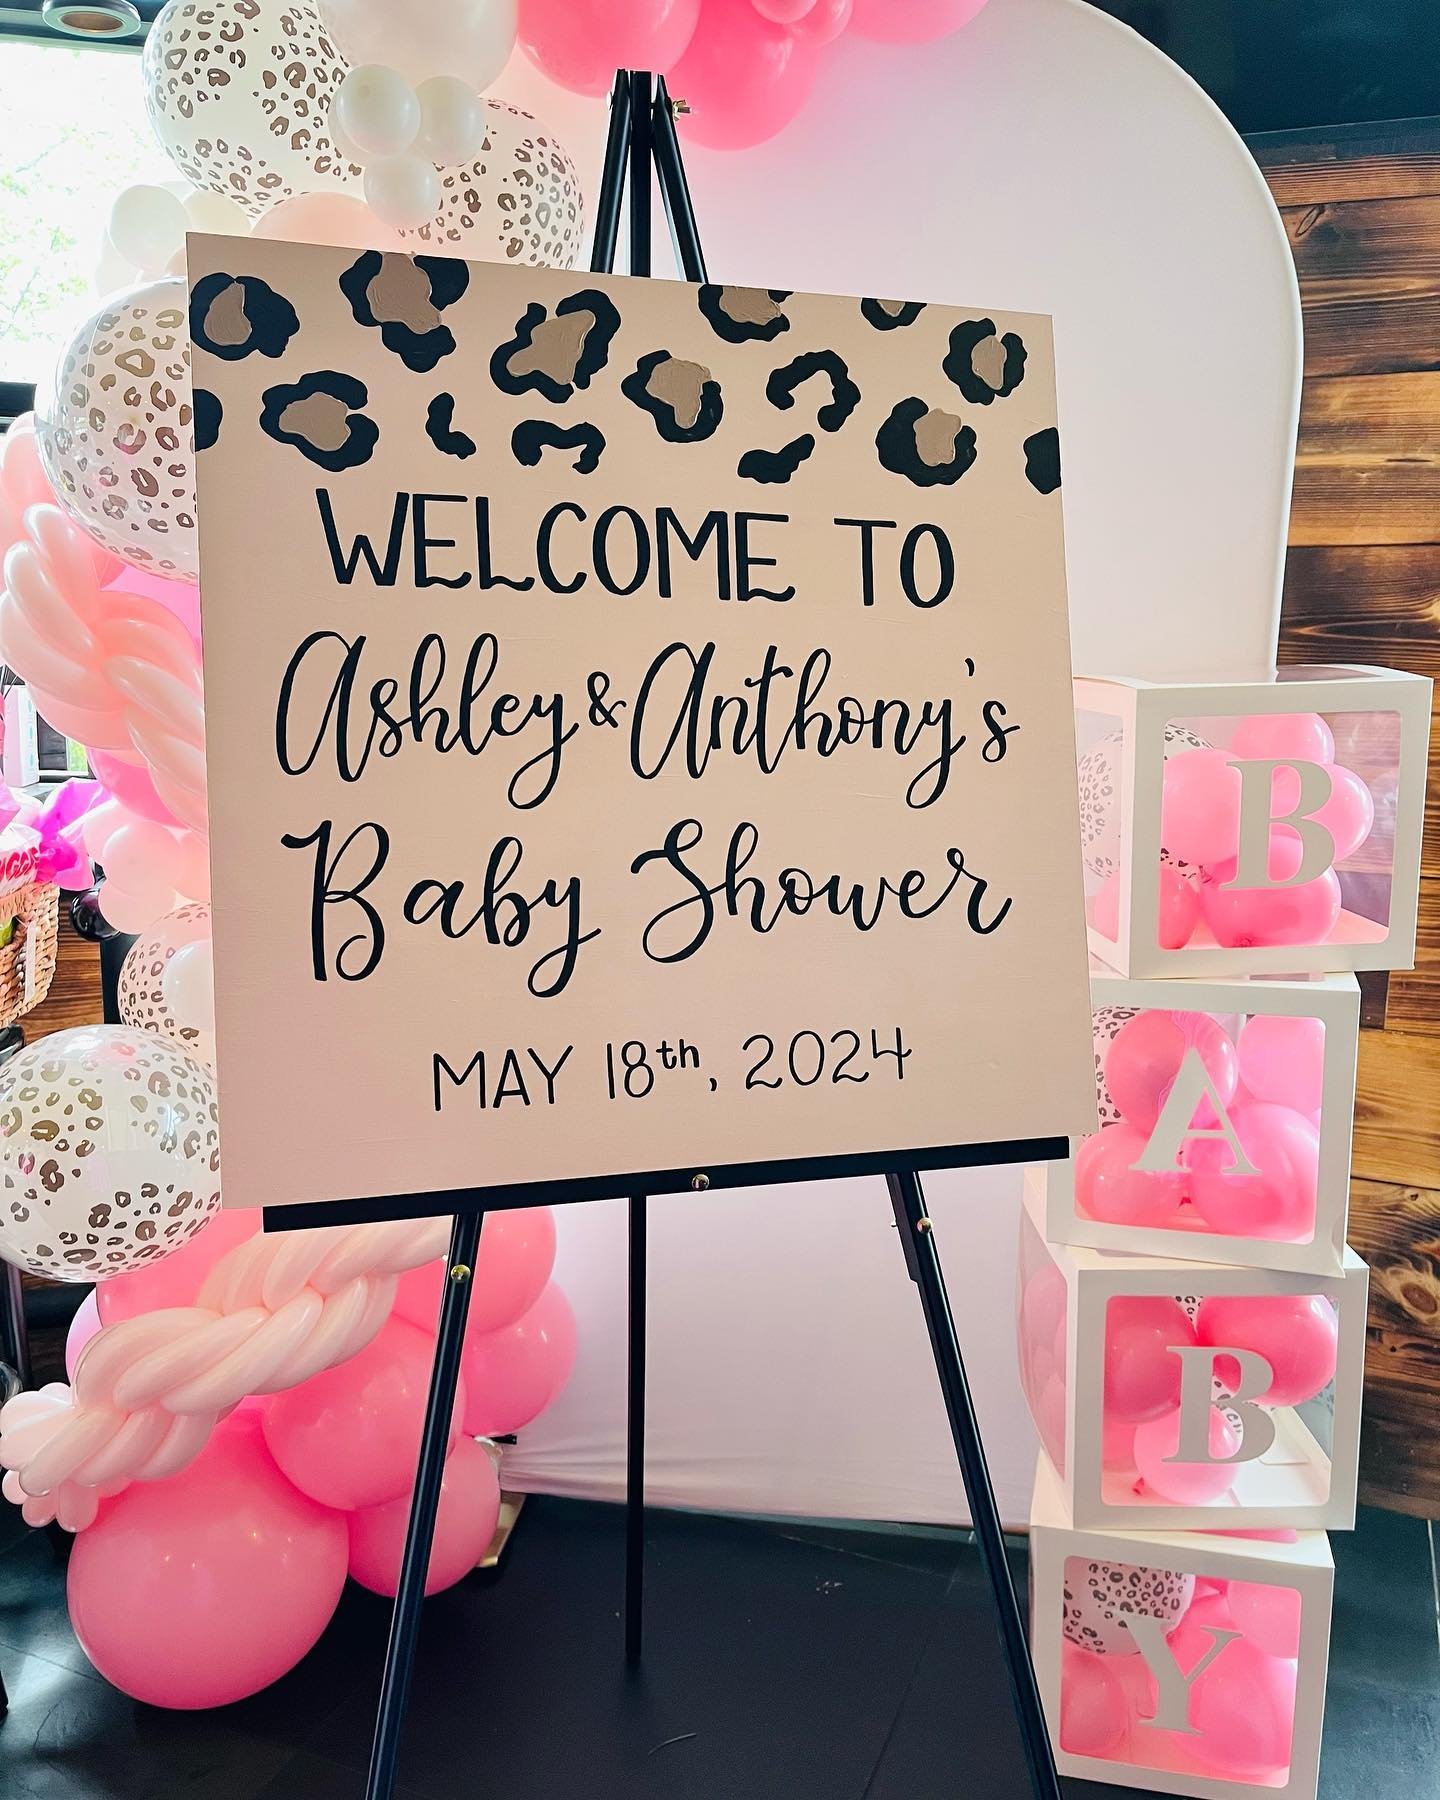 Happy Shower day to Ashley and Anthony 💕🐆 
.
.
.
#cheetahprint #showersign #babyshower #handlettering #calligraphy #bostonartist #eventsignage #art #artistsoninstagram #explore #explorepage #fyp #foryou